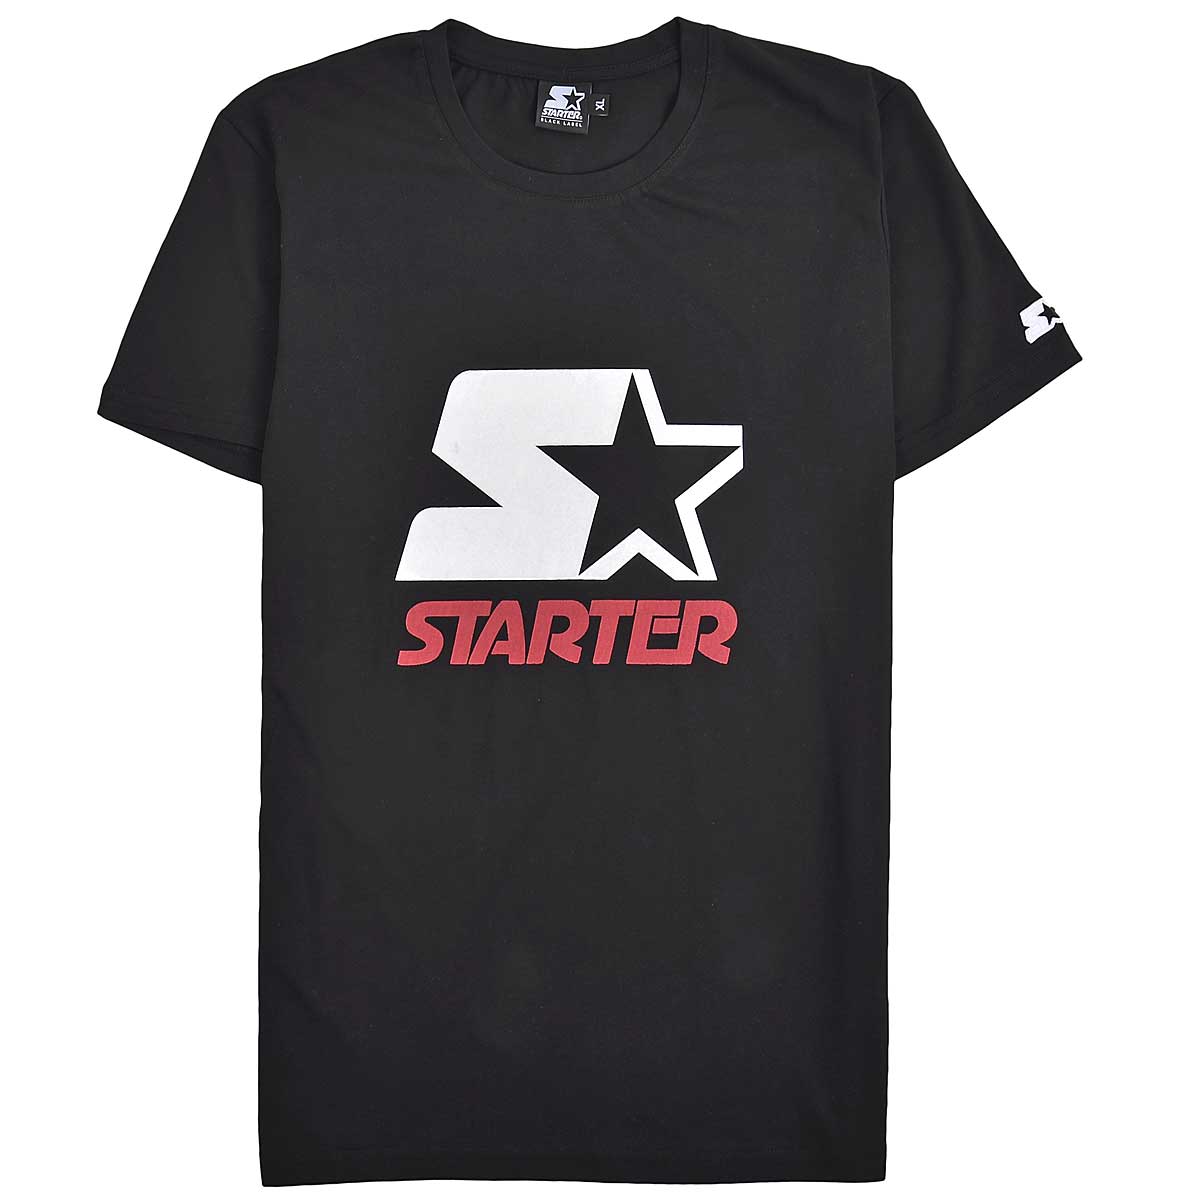 Starter com. Футболка фирмы Starter. Z Starter футболка. ЭС стартер футболка. Футболка PROFEST.